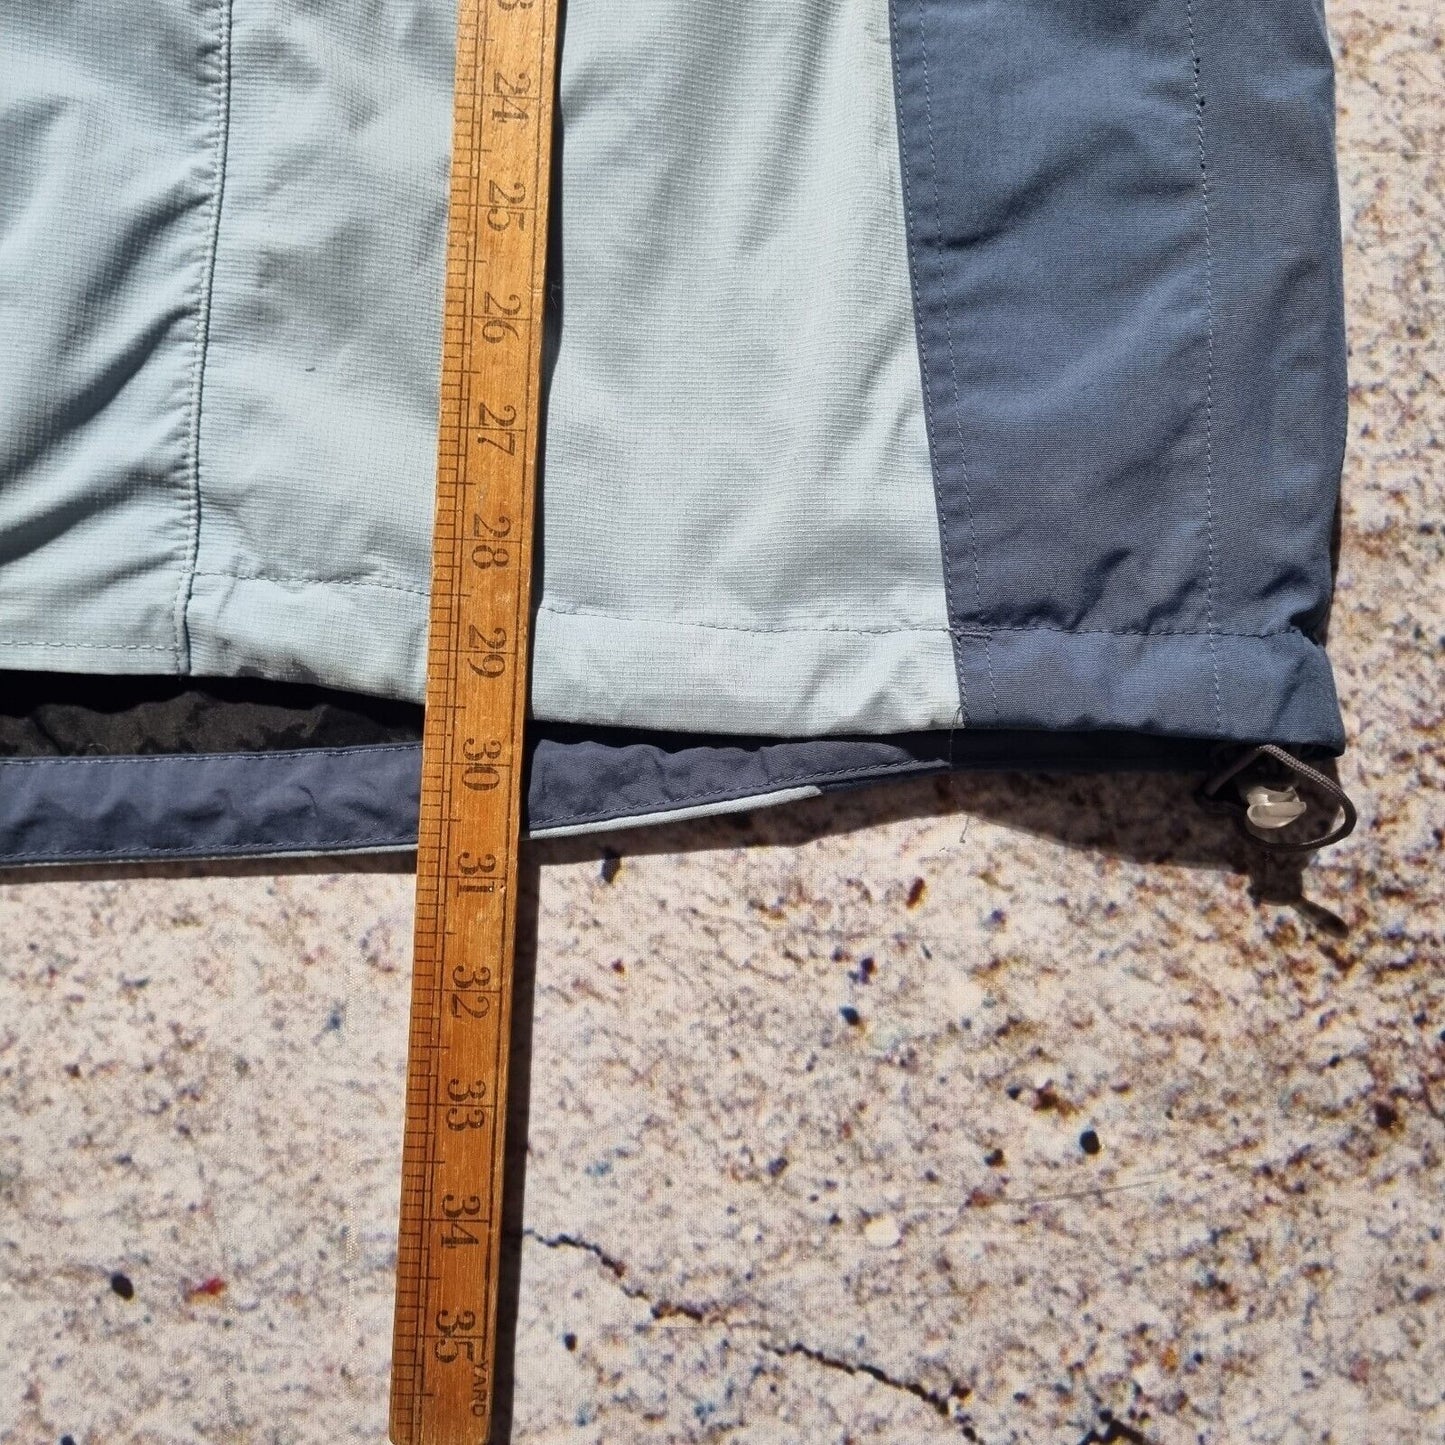 Berghaus Goretex Xcr Shell Jacket Coat Mountain Waterproof Blue Womens Size 16